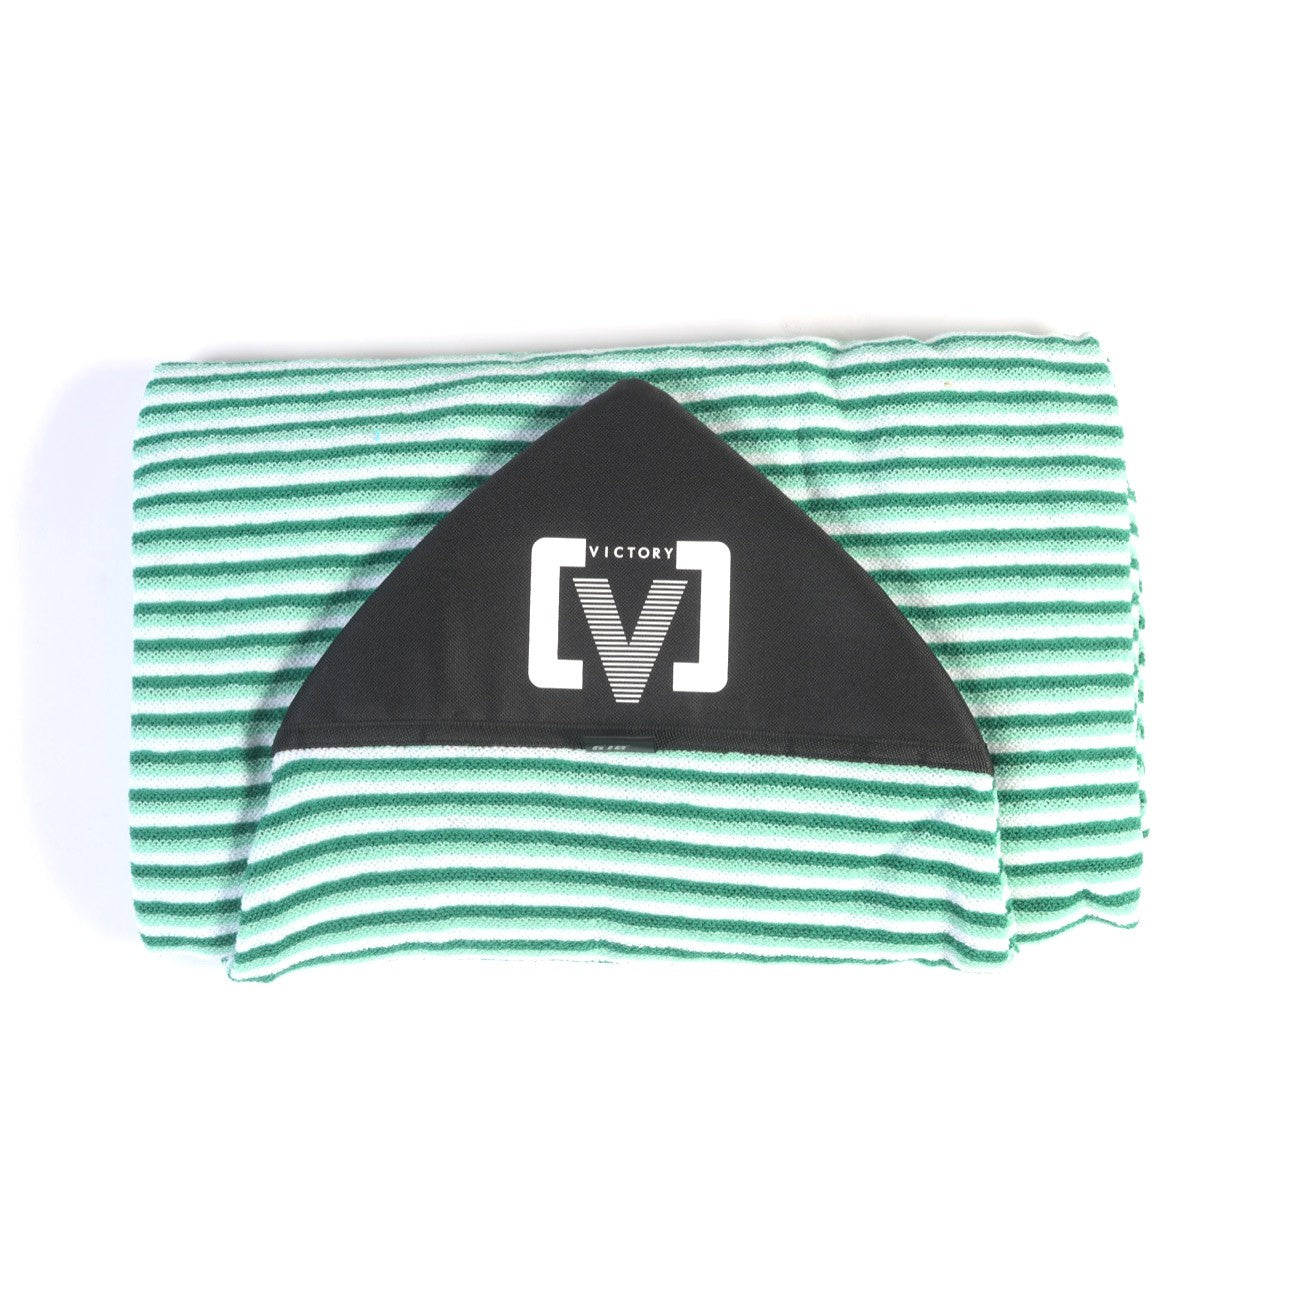 VICTORY - Surf sock cover - Retro / Fish / Hybrid - 5'10 - Green / White